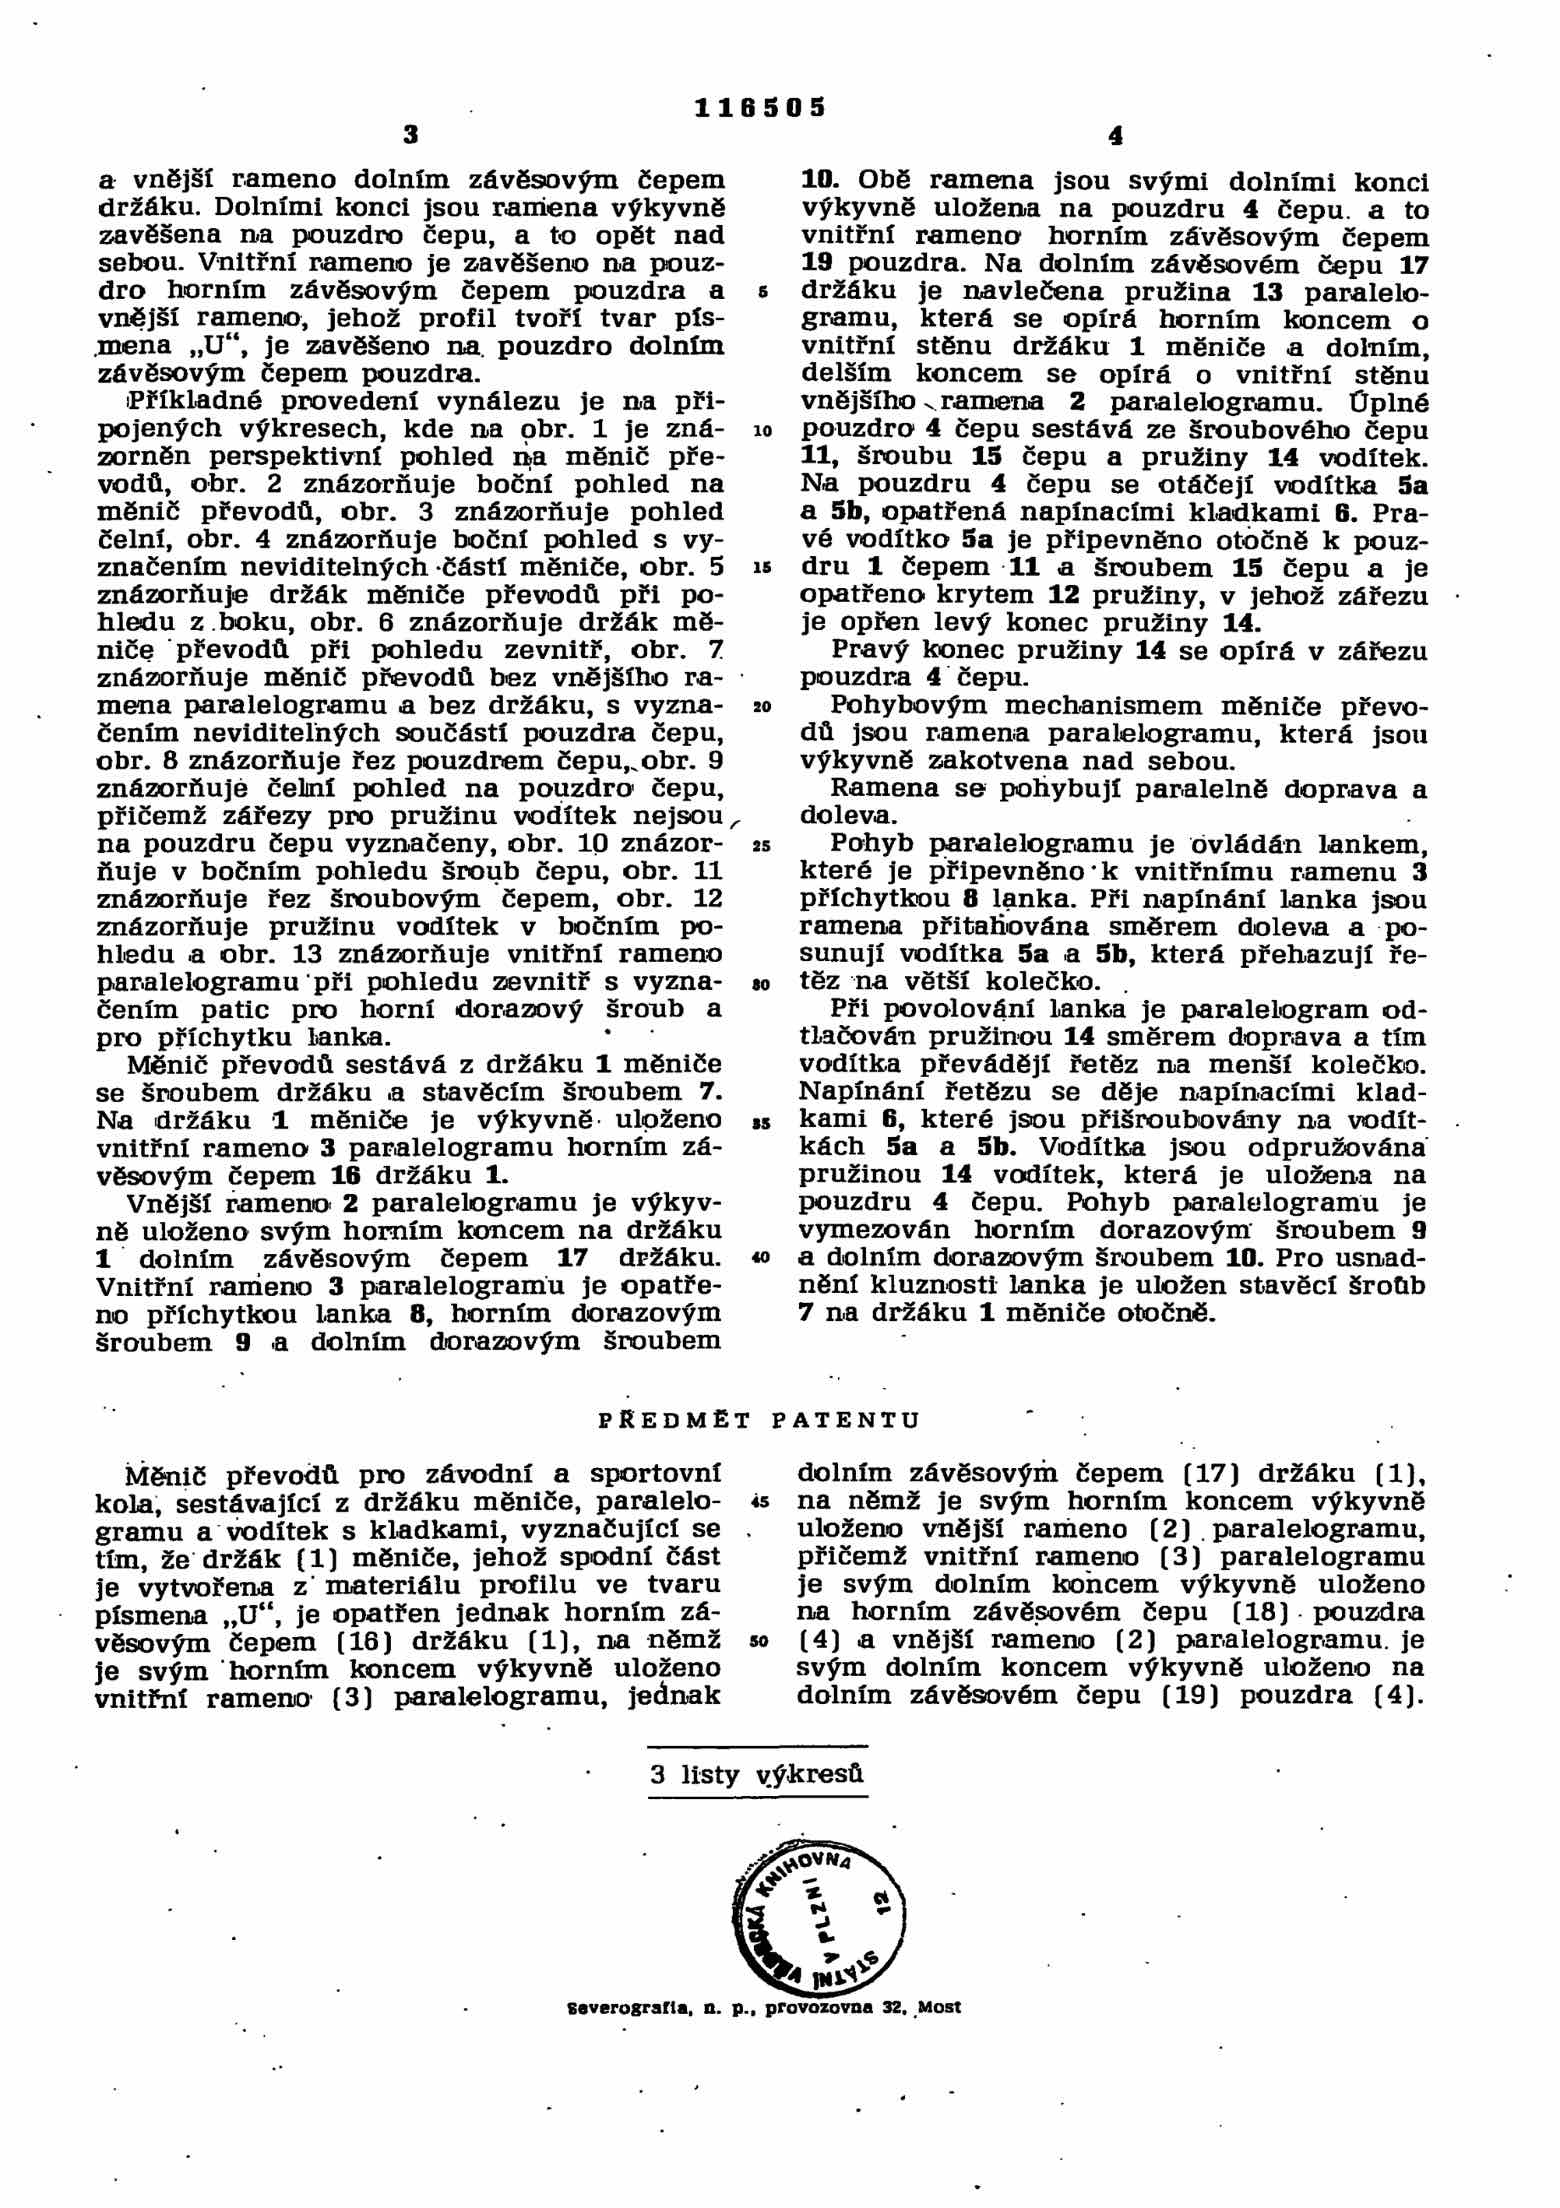 Czech Patent 116,505 - unknown derailleur scan 2 main image